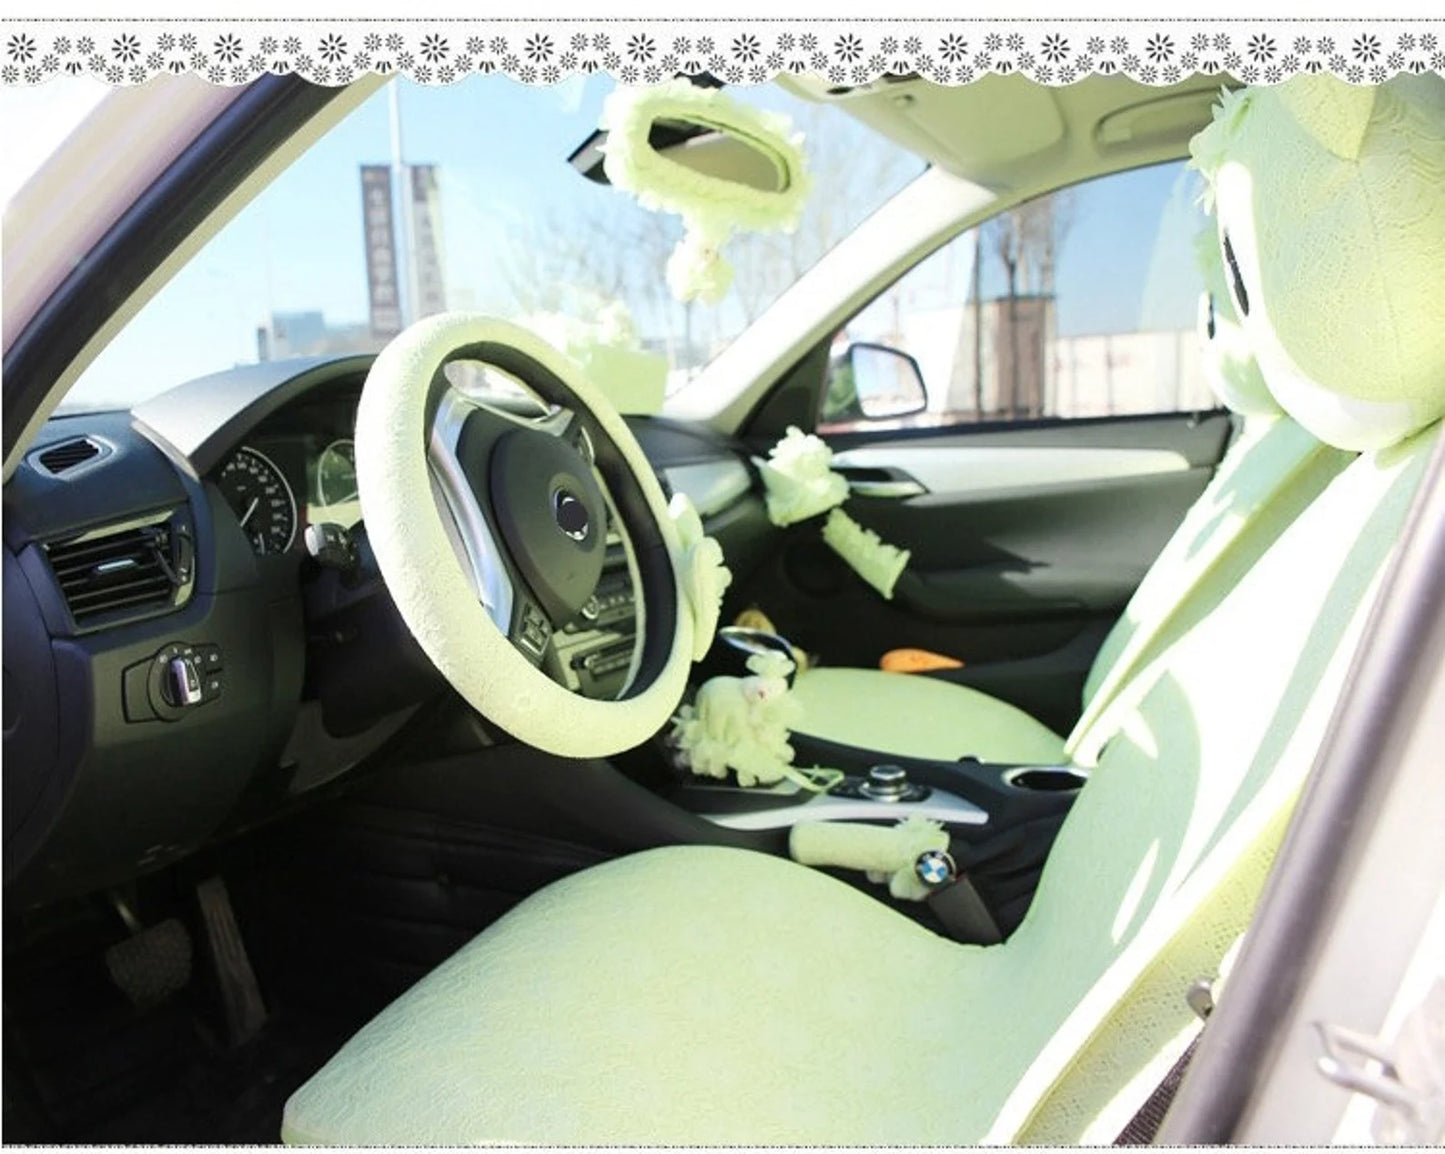 Car Rearview Mirror Cover - Cute Cover - Reversing Mirror